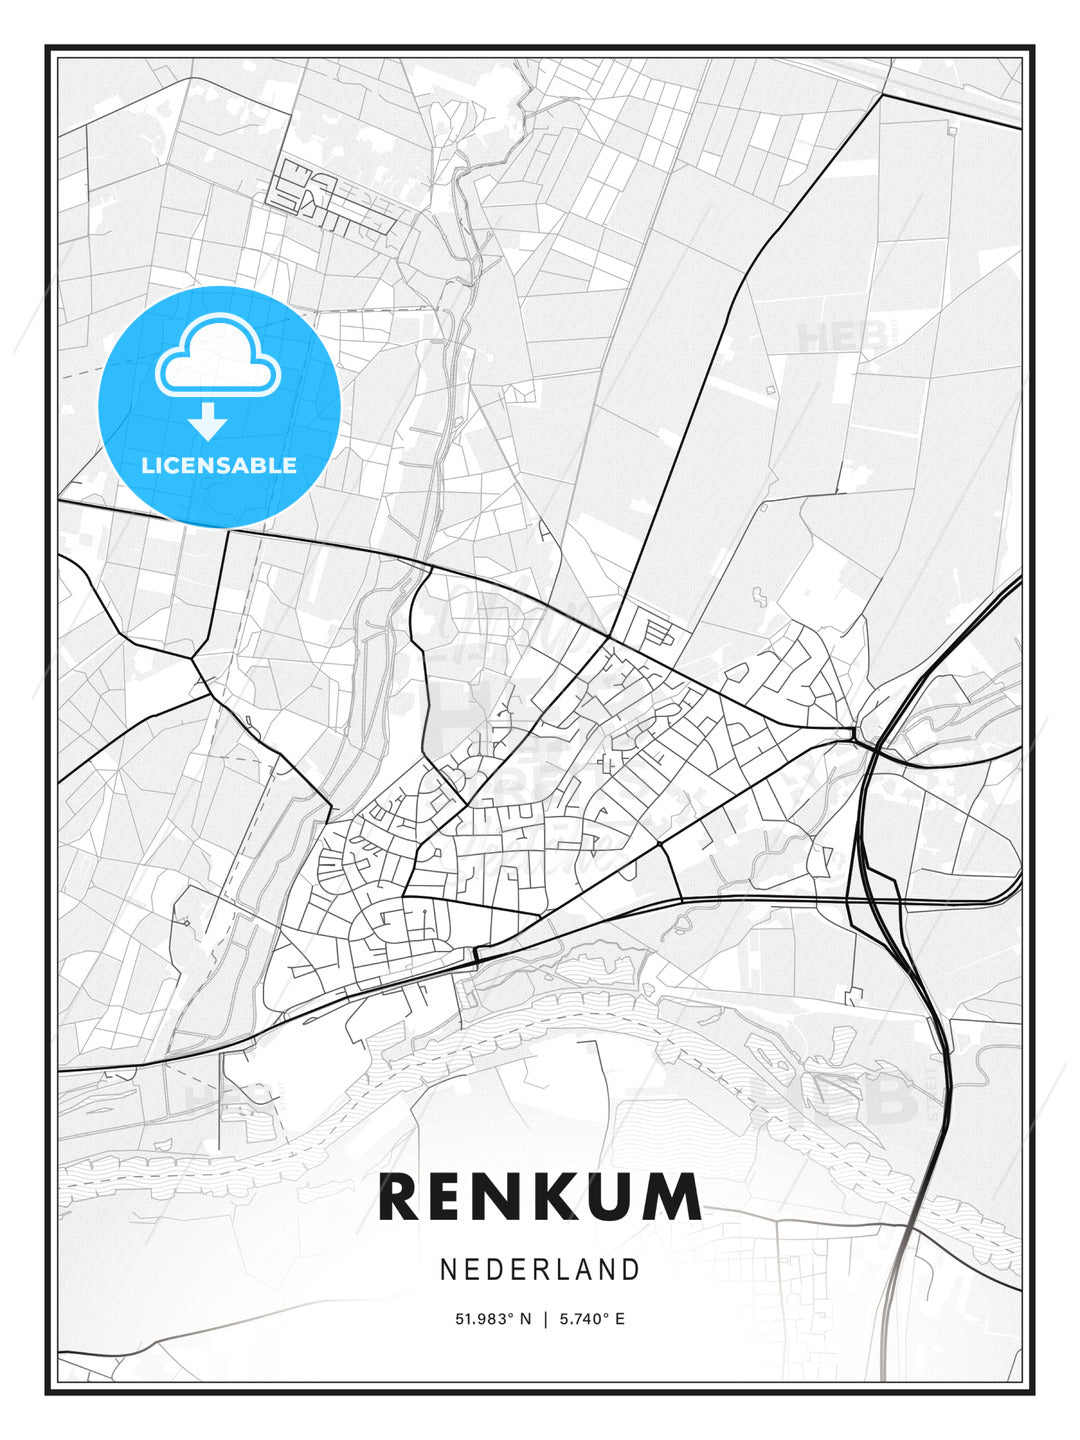 Renkum, Netherlands, Modern Print Template in Various Formats - HEBSTREITS Sketches